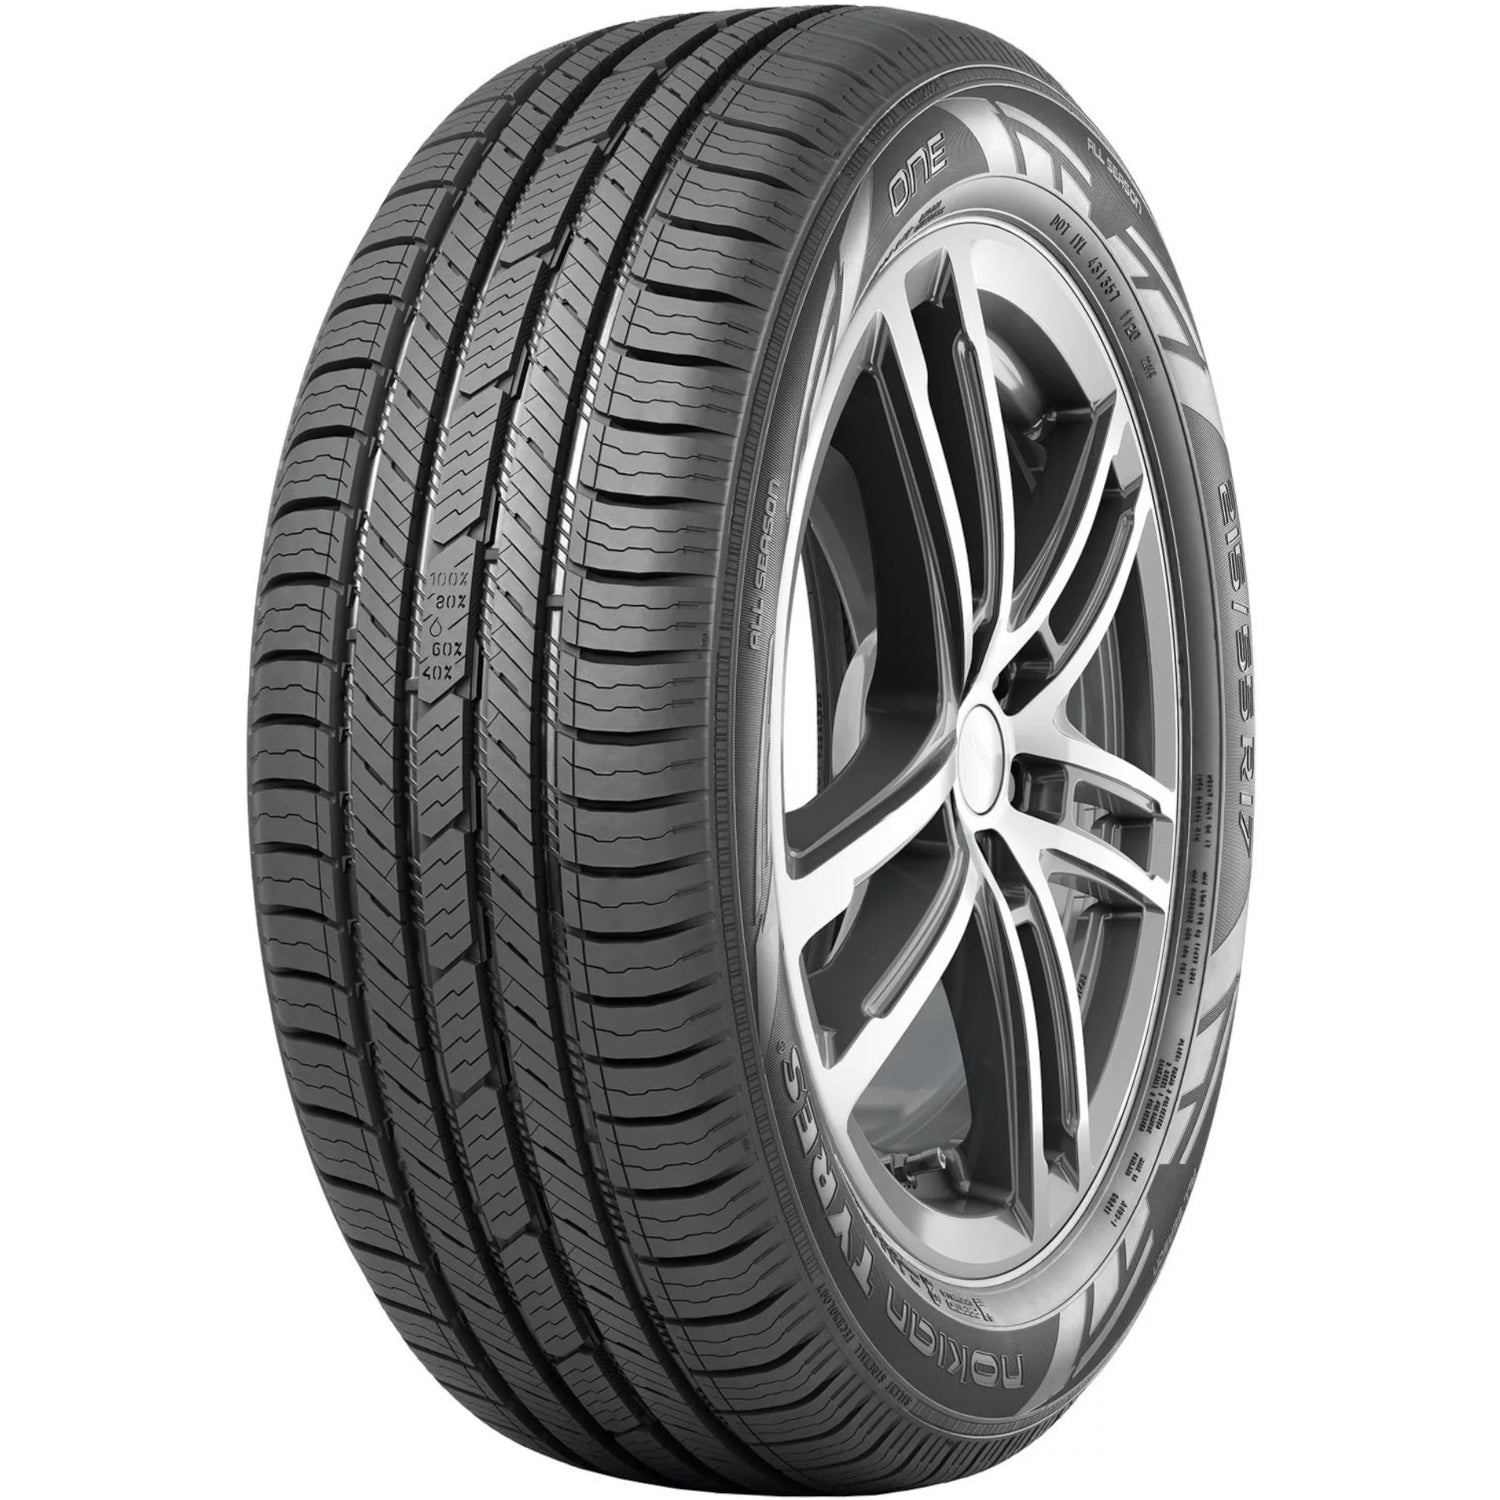 NOKIAN ONE 205/55R16 (24.9X8.1R 16) Tires